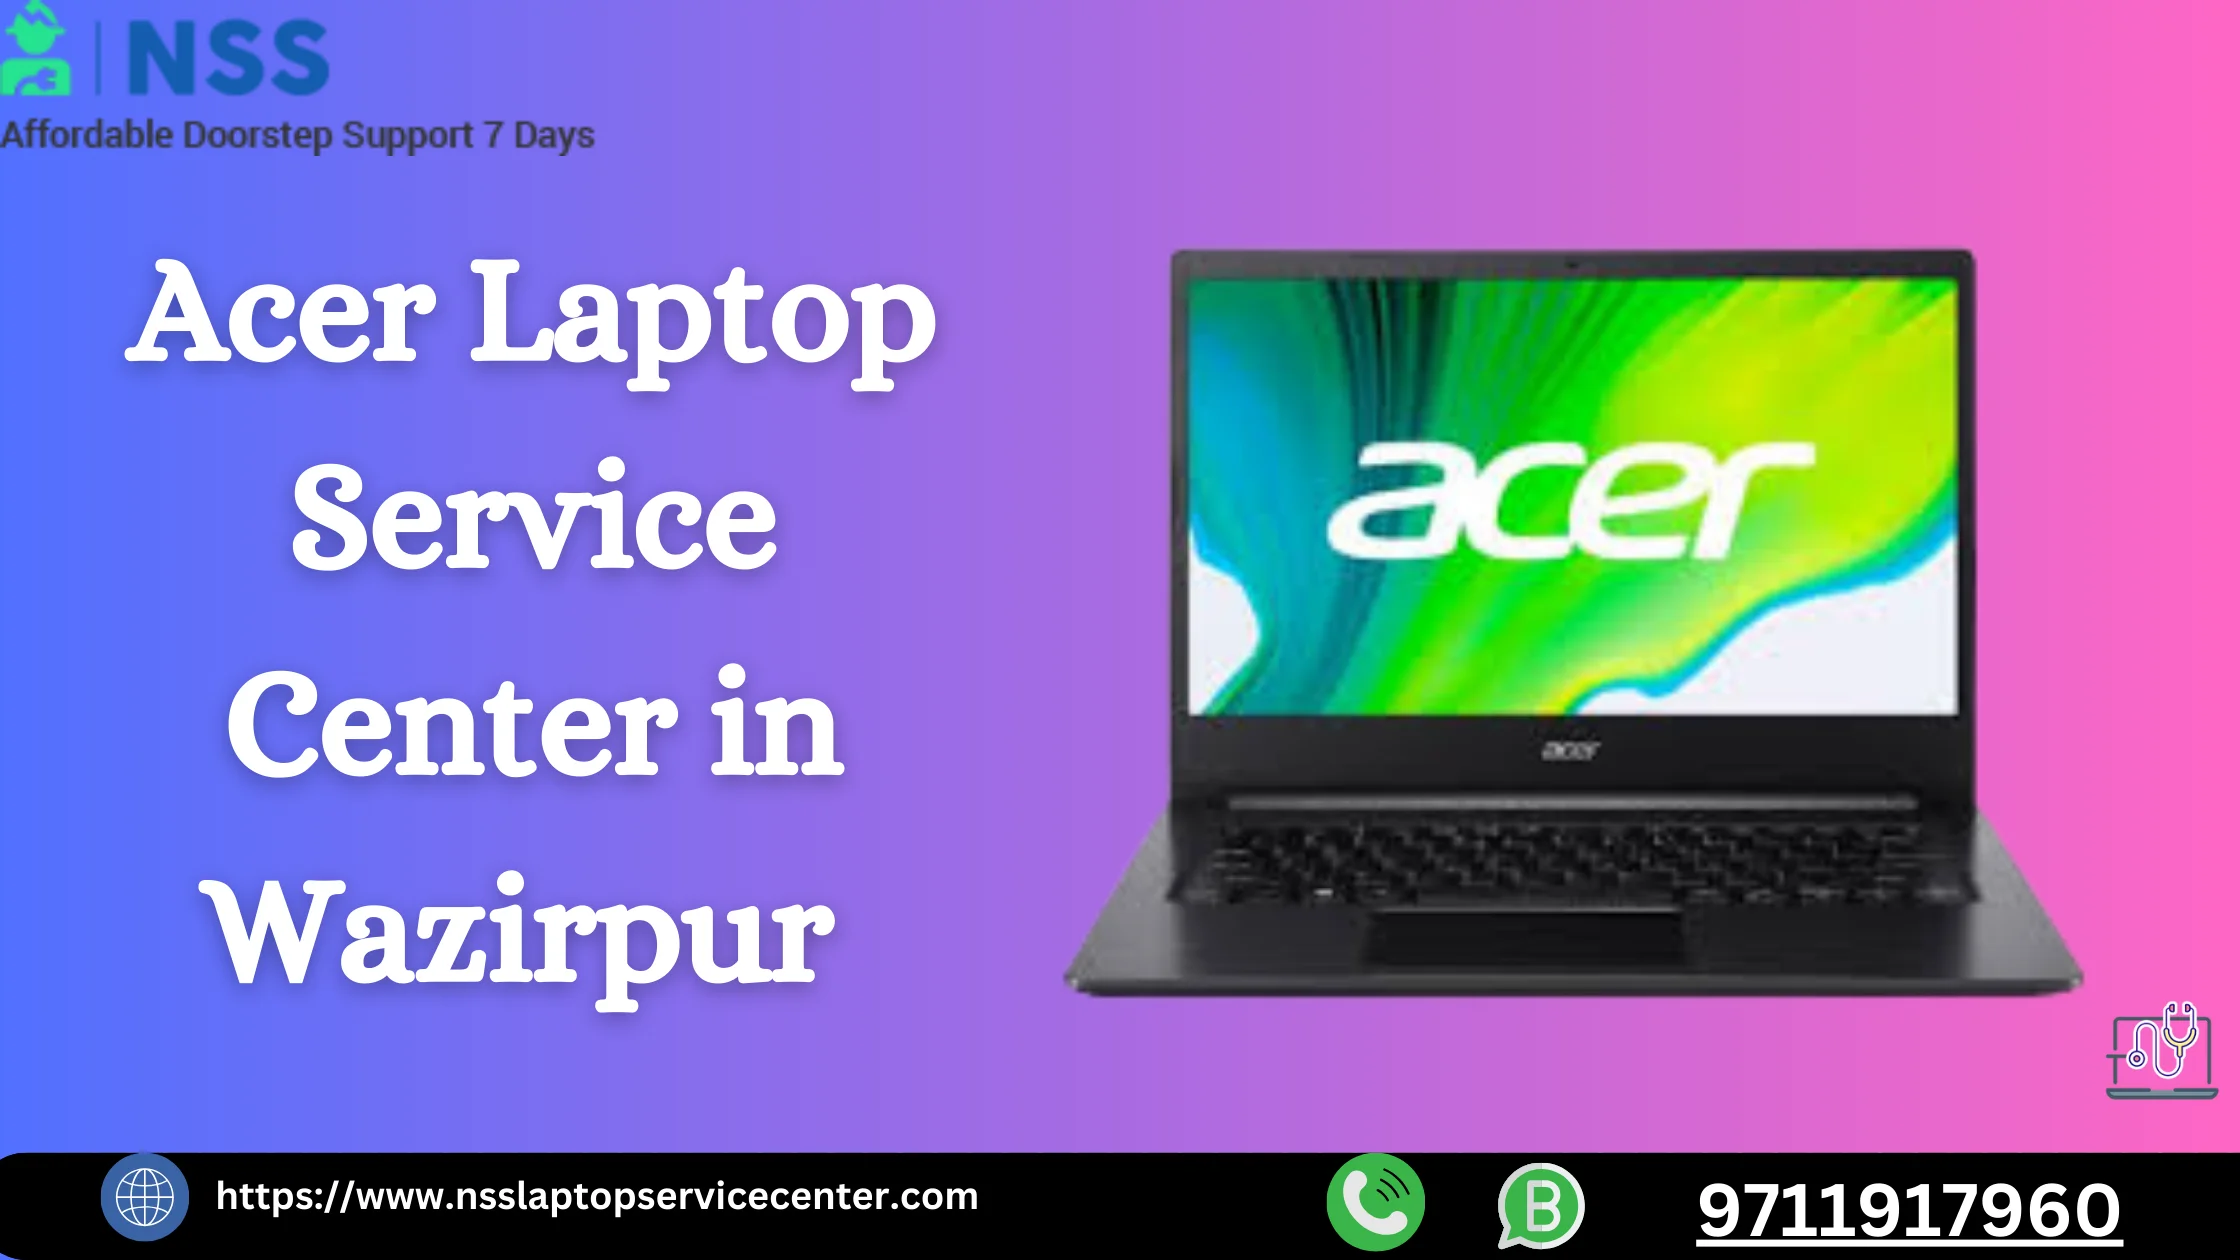 Acer Laptop Service Center in Wazirpur Near Delhi